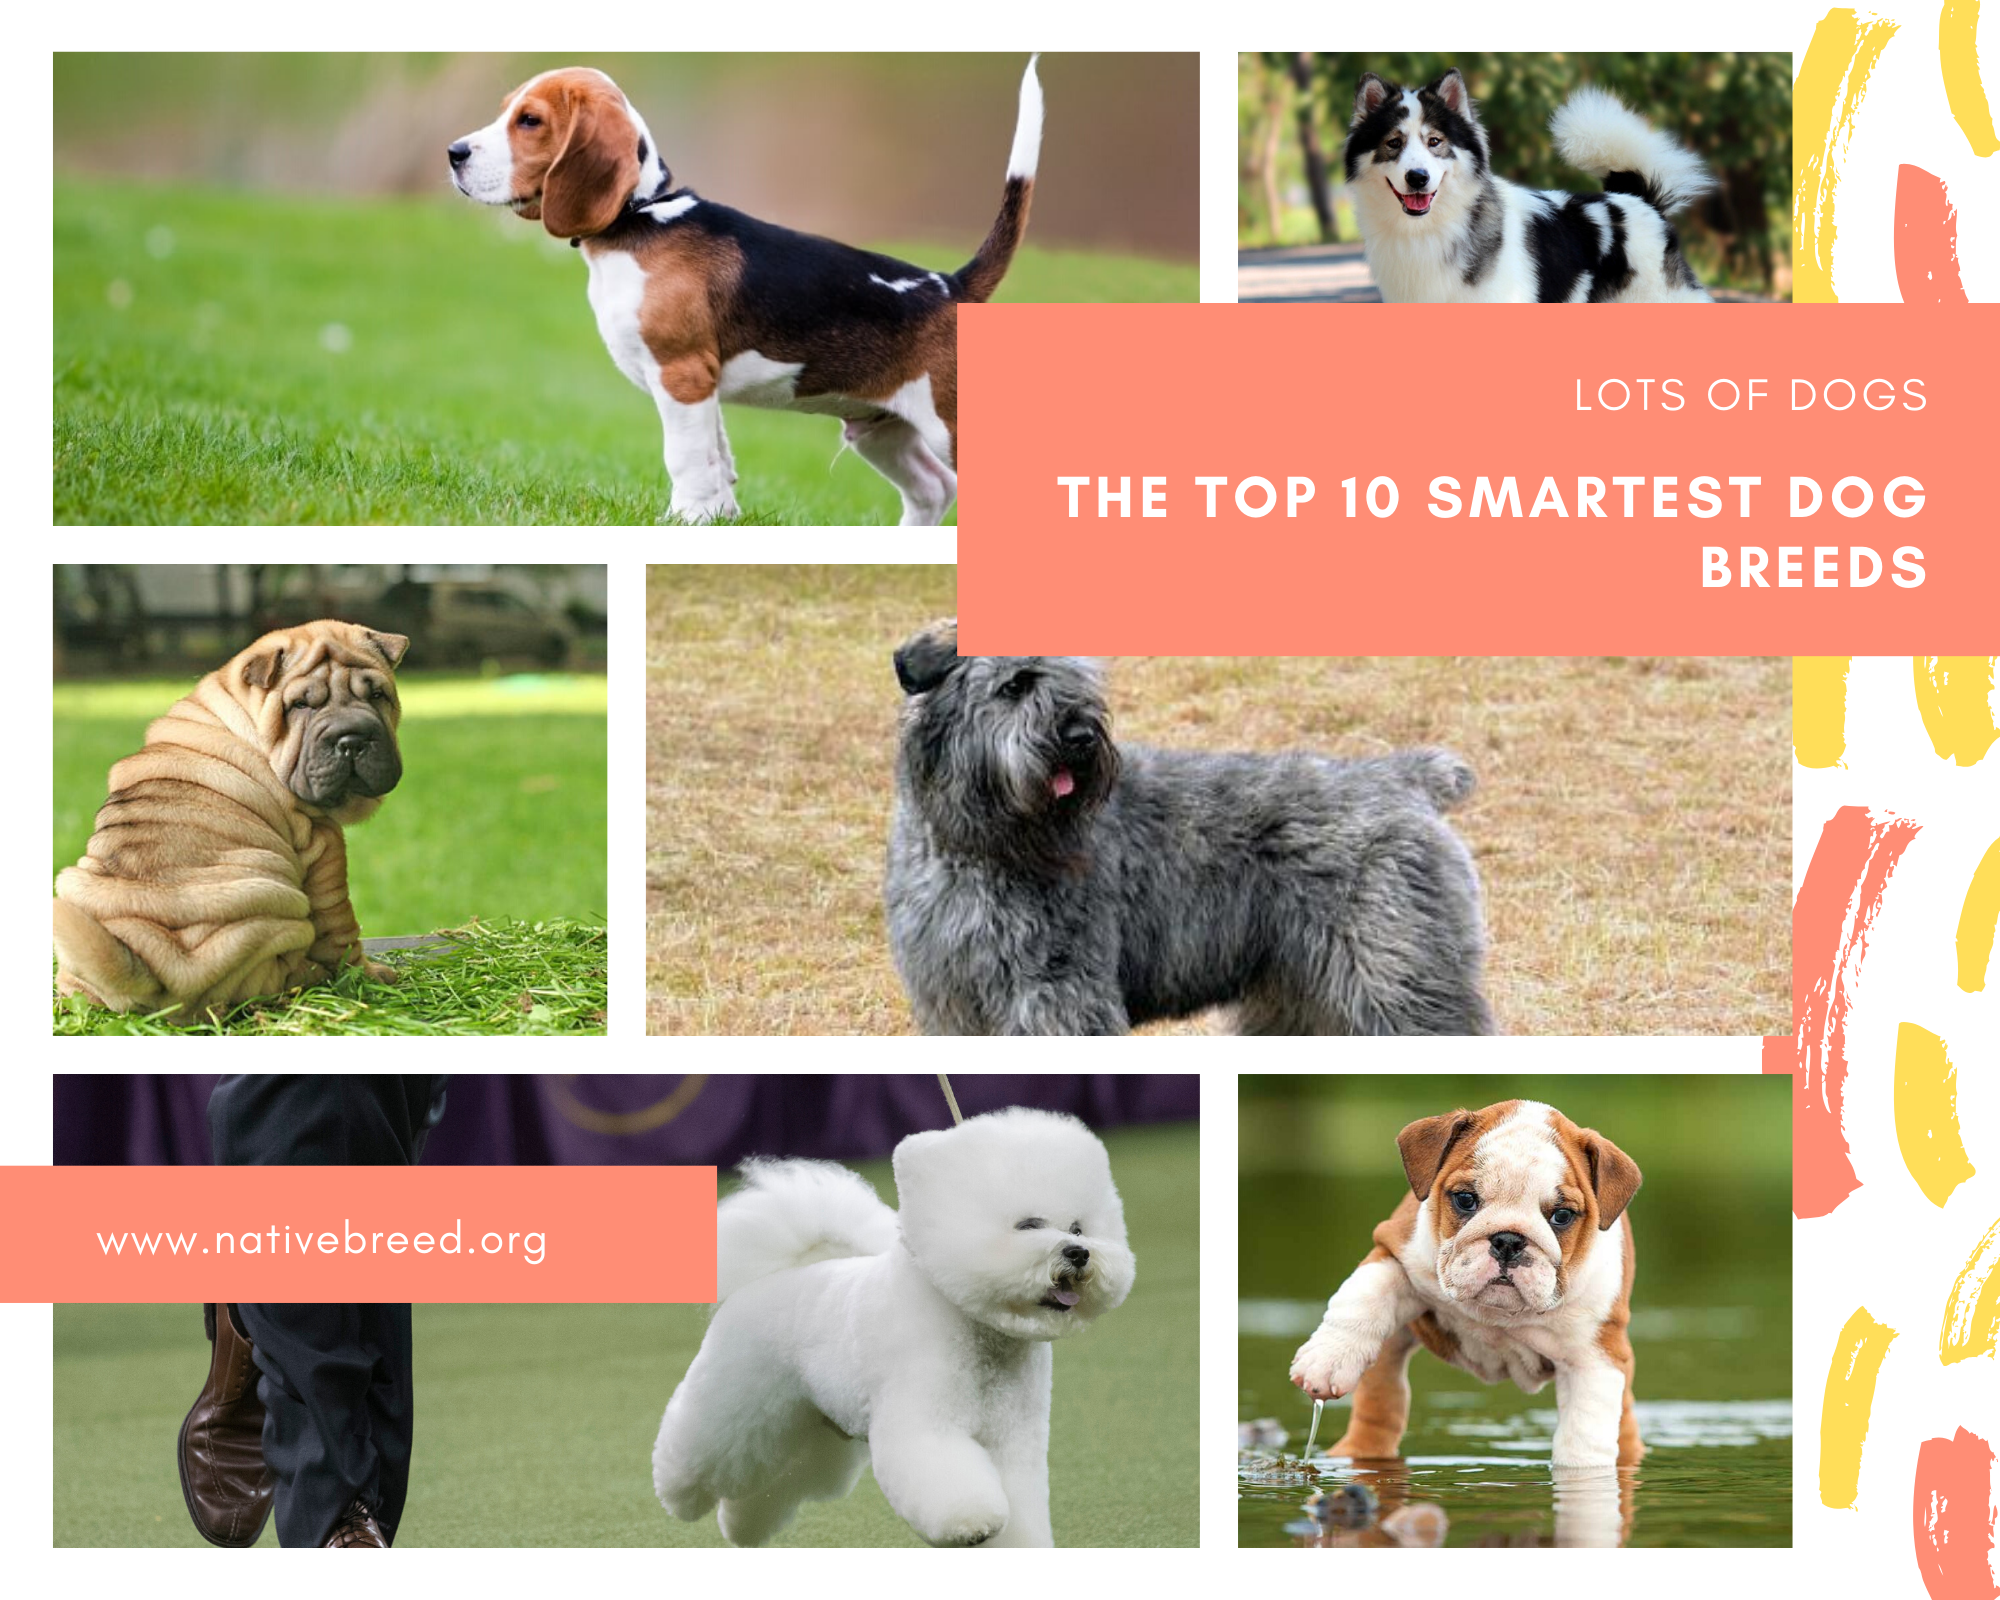 The 10 smartest dog breeds - Native Breed.org